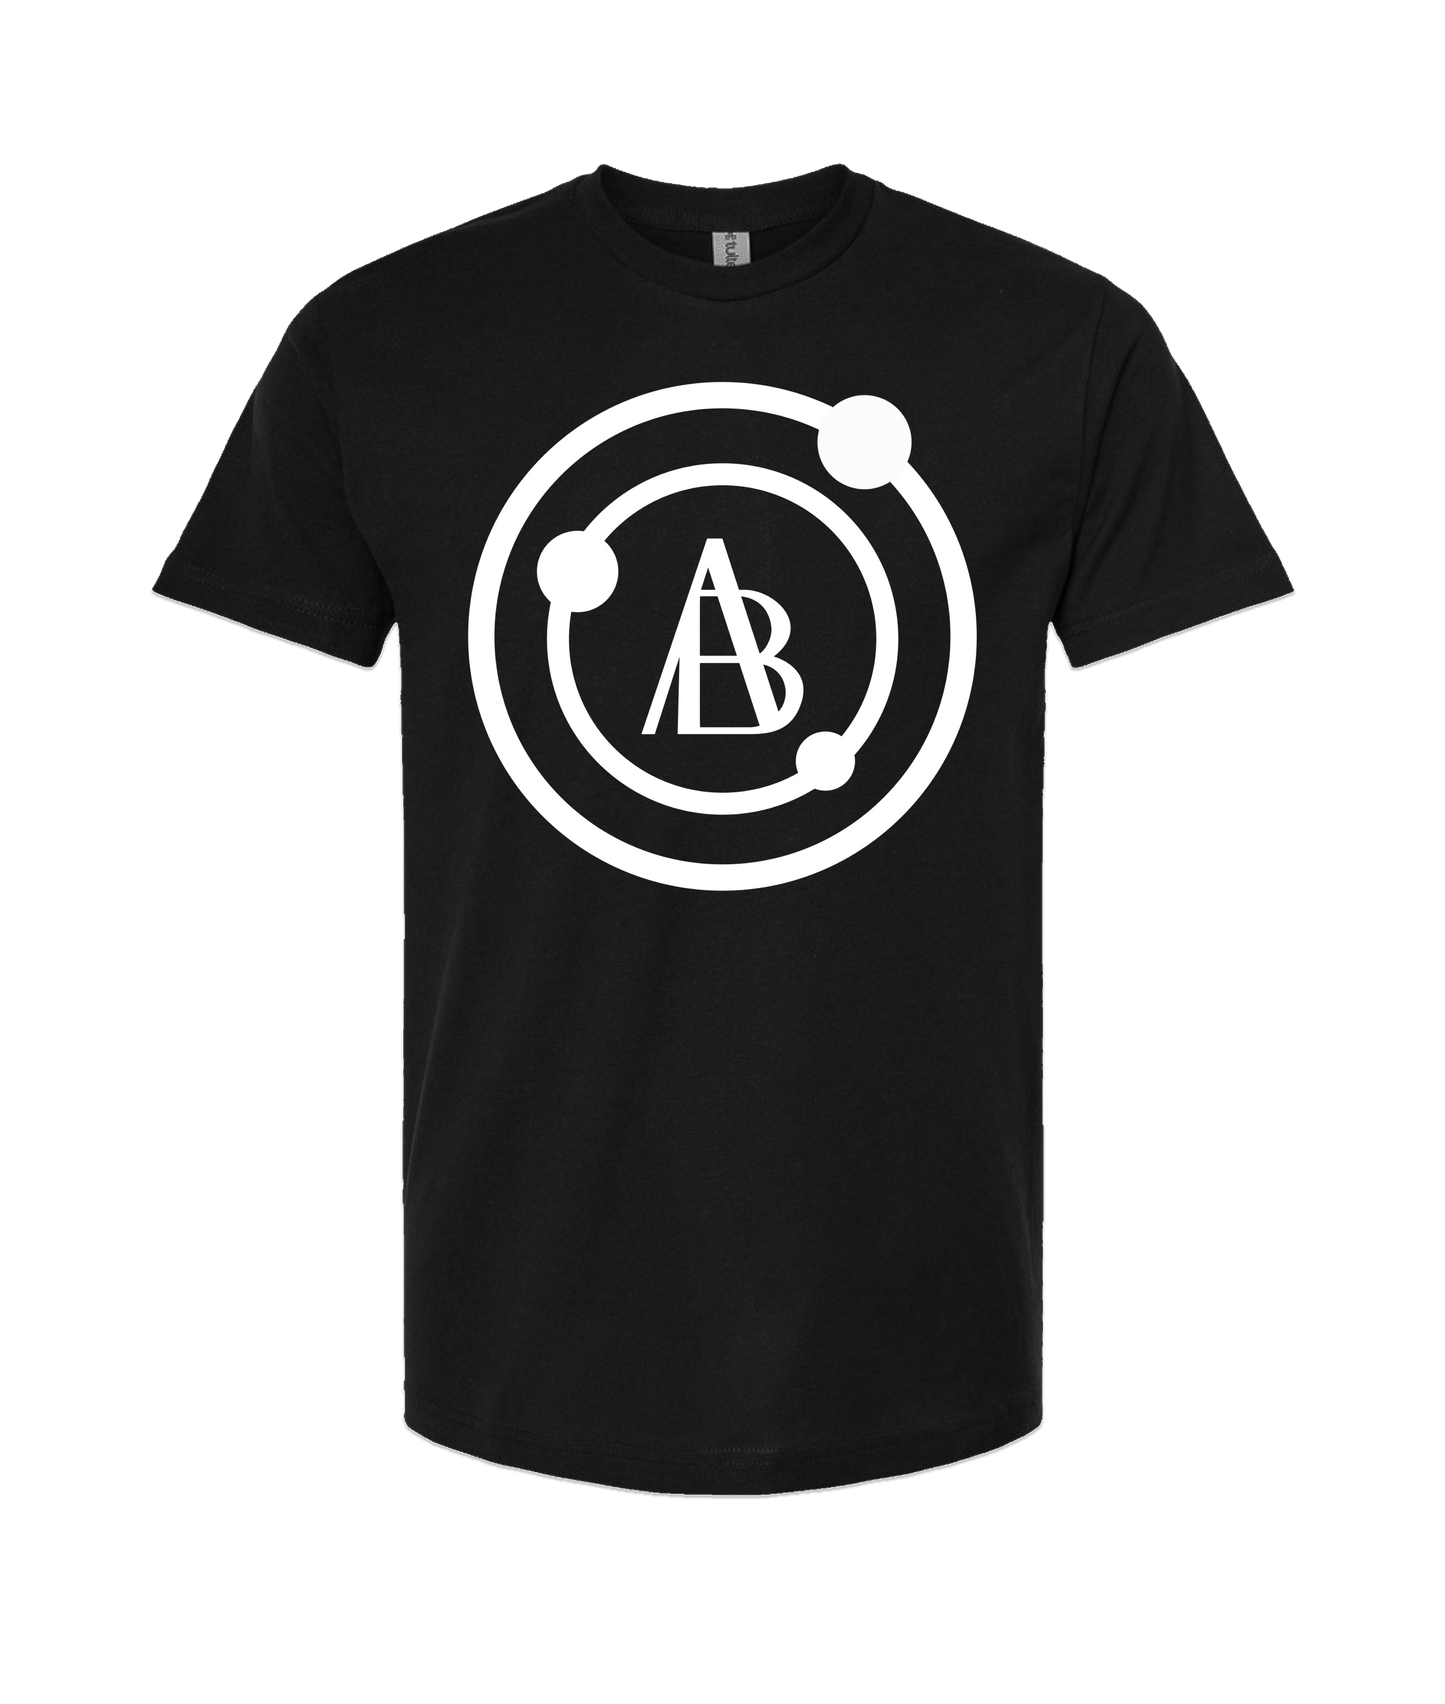 ANGEL BARBOSA - DESIGN 1 - Black T-Shirt